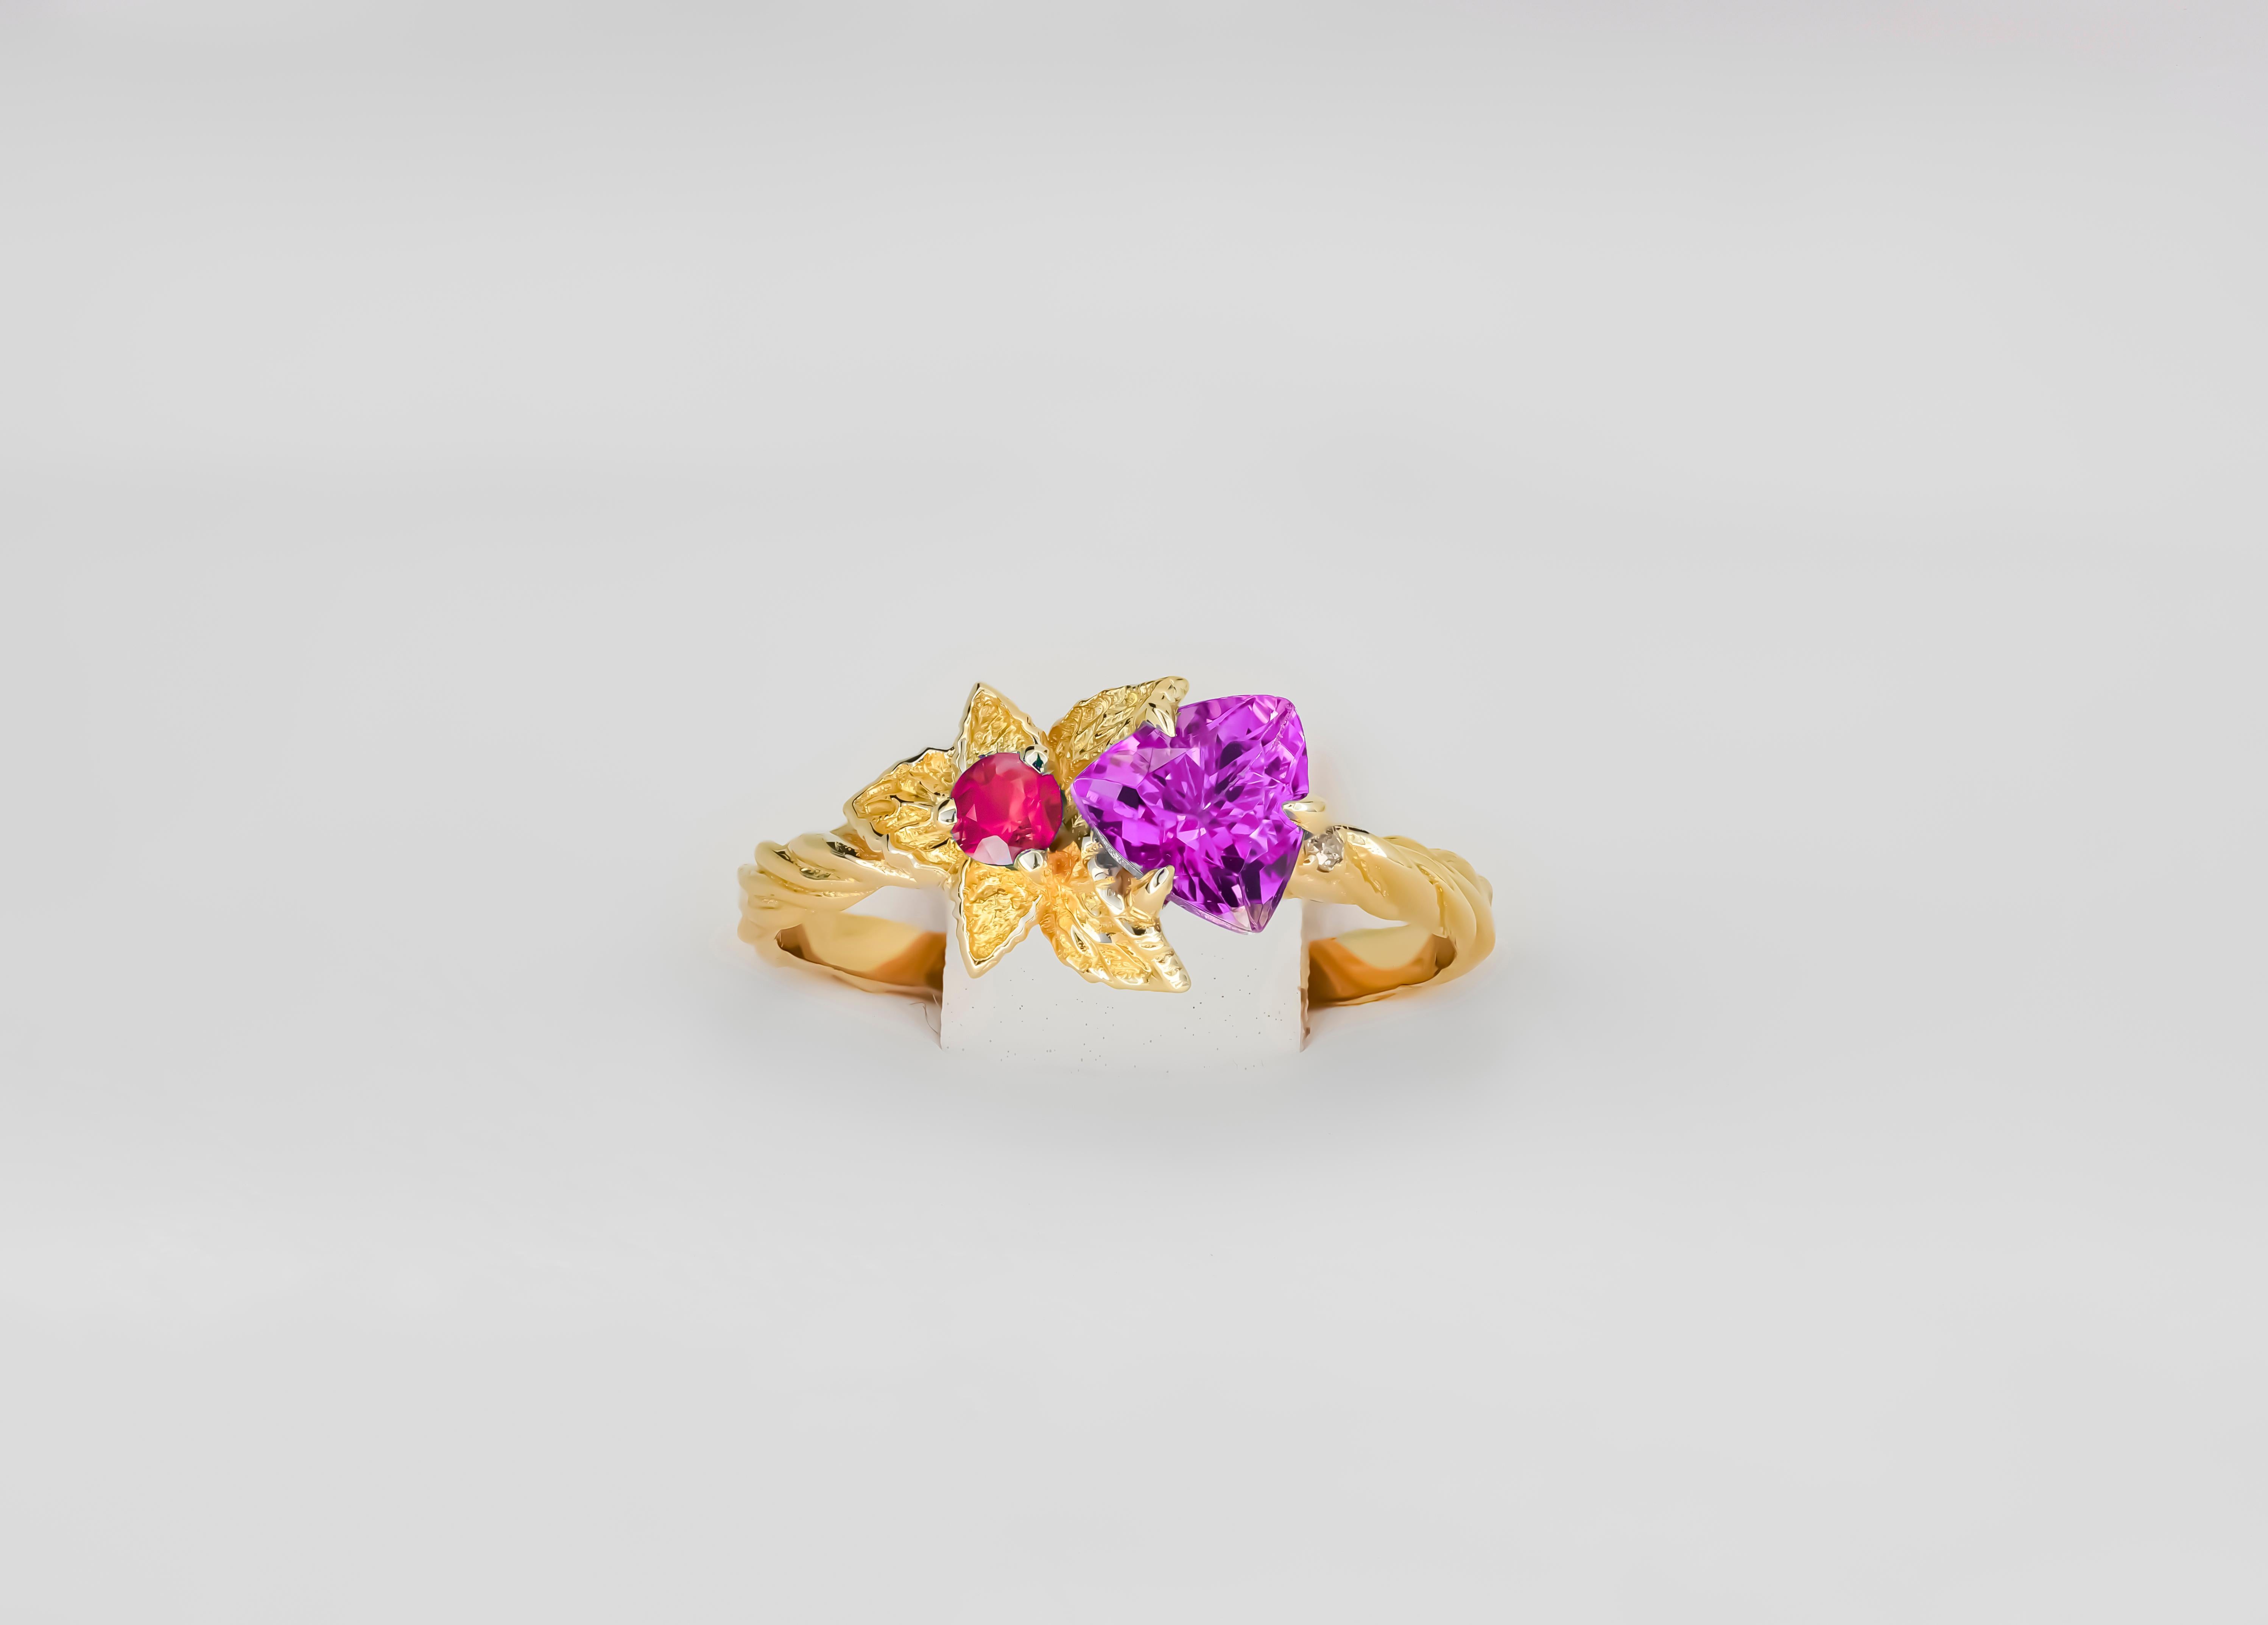 Flower red purple gemstone 14k gold ring.
Triangle purple gemstone gold ring. Lab amethyst, ruby gold ring. Flower gold ring.

Weight: 2.25 g. depends from size

Gemstones:
 Lab amethyst, weight: approx 0.45-0.50 ct, cut - trillion, purple color
